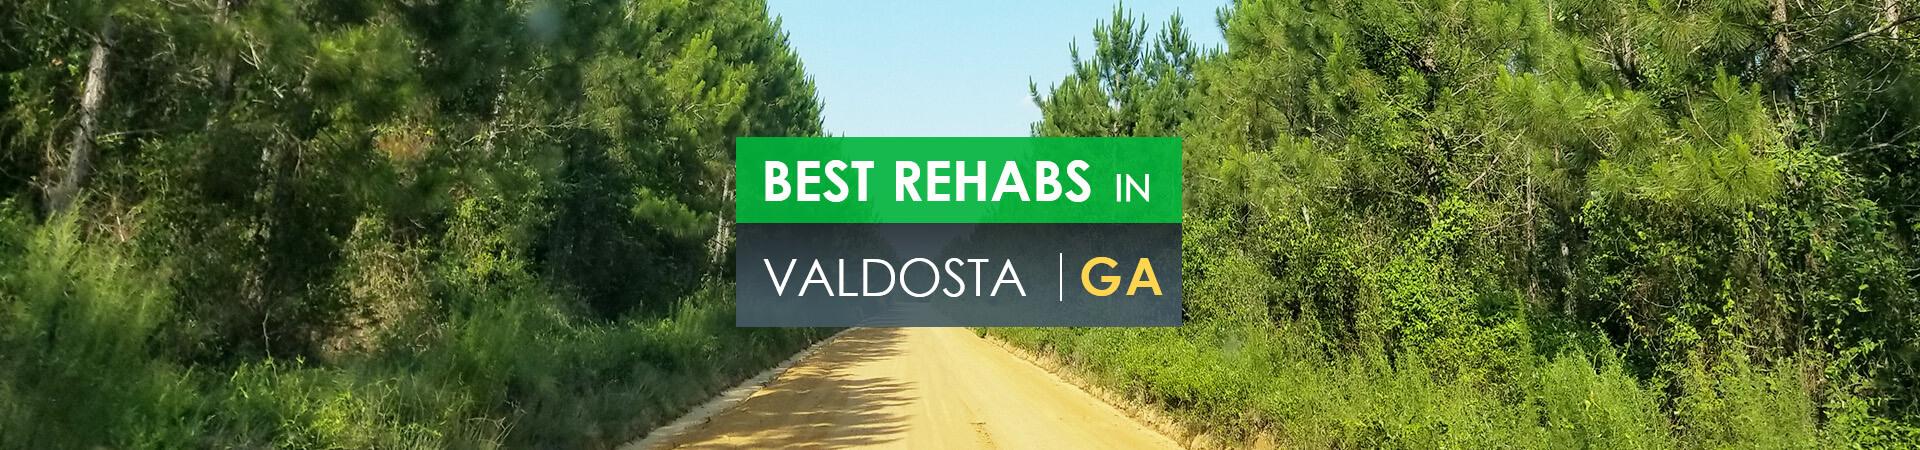 Best rehabs in Valdosta, GA